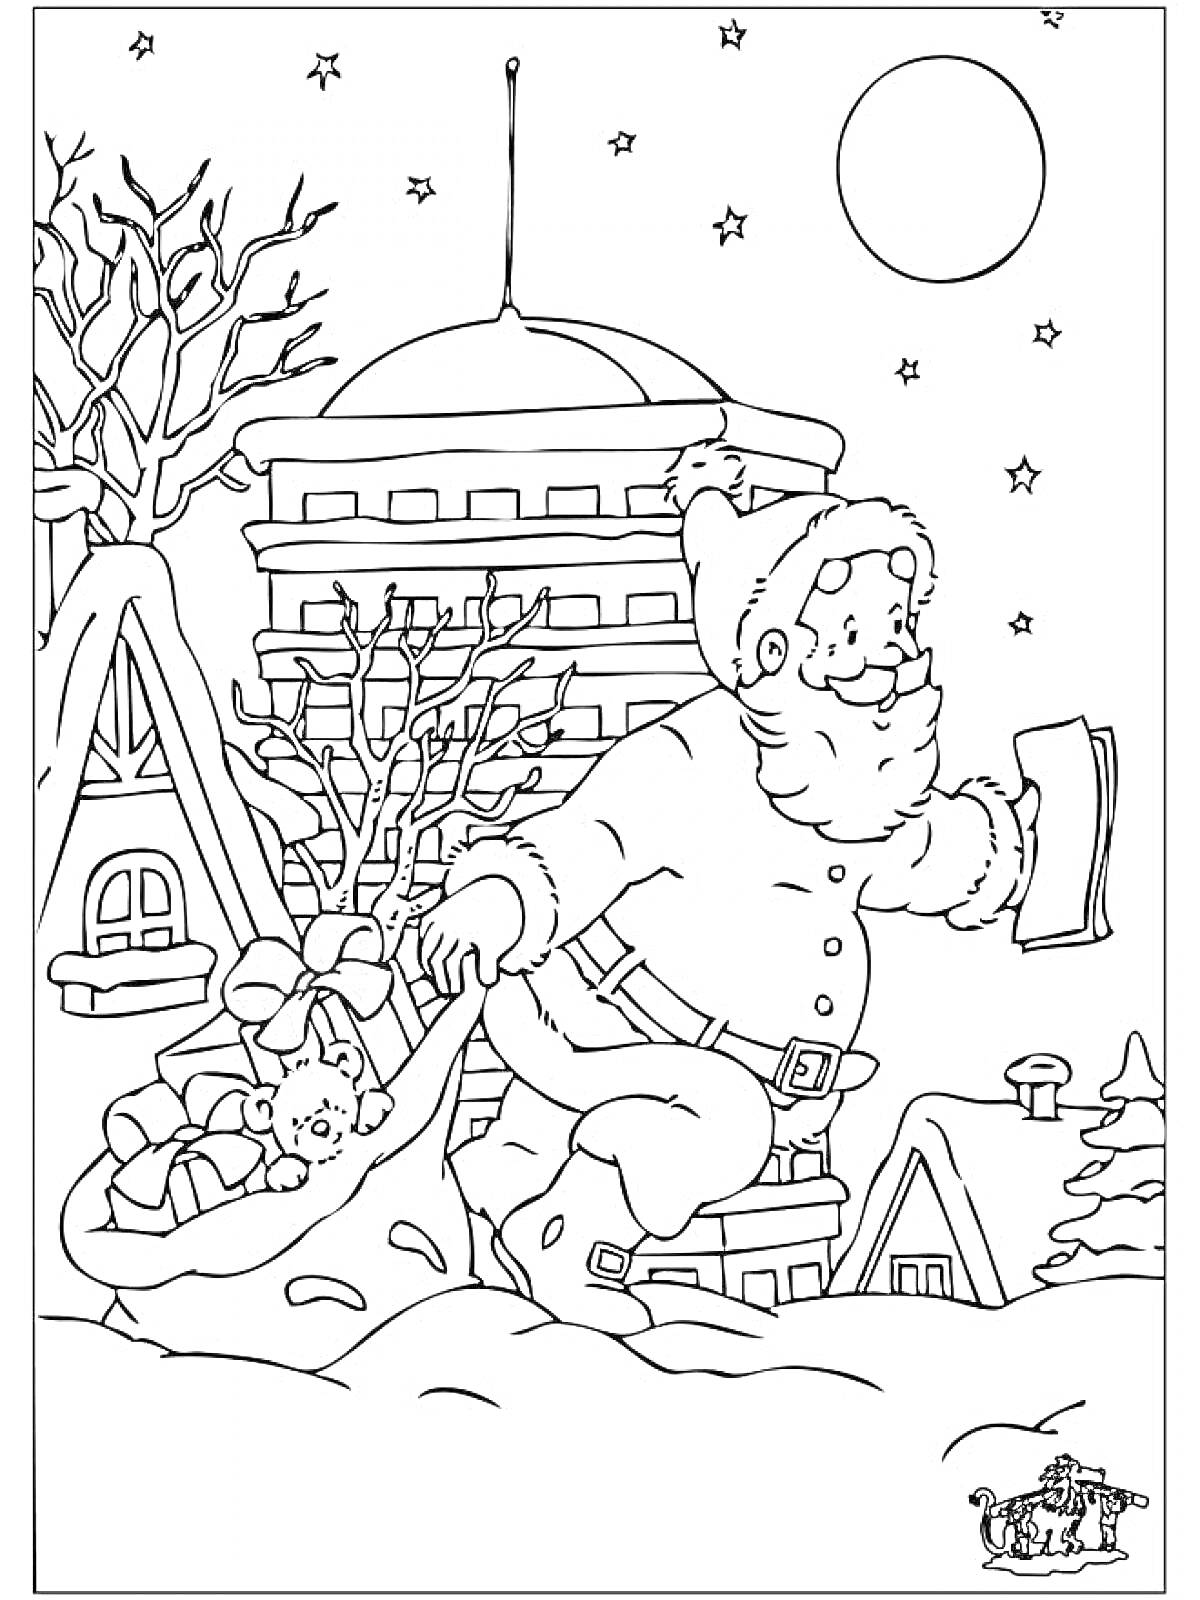 На раскраске изображено: Подарки, Крыша, Снег, Звезды, Луна, Дом, Зима, Рождество, Санта Клаус, Елки, Игрушки, Праздники